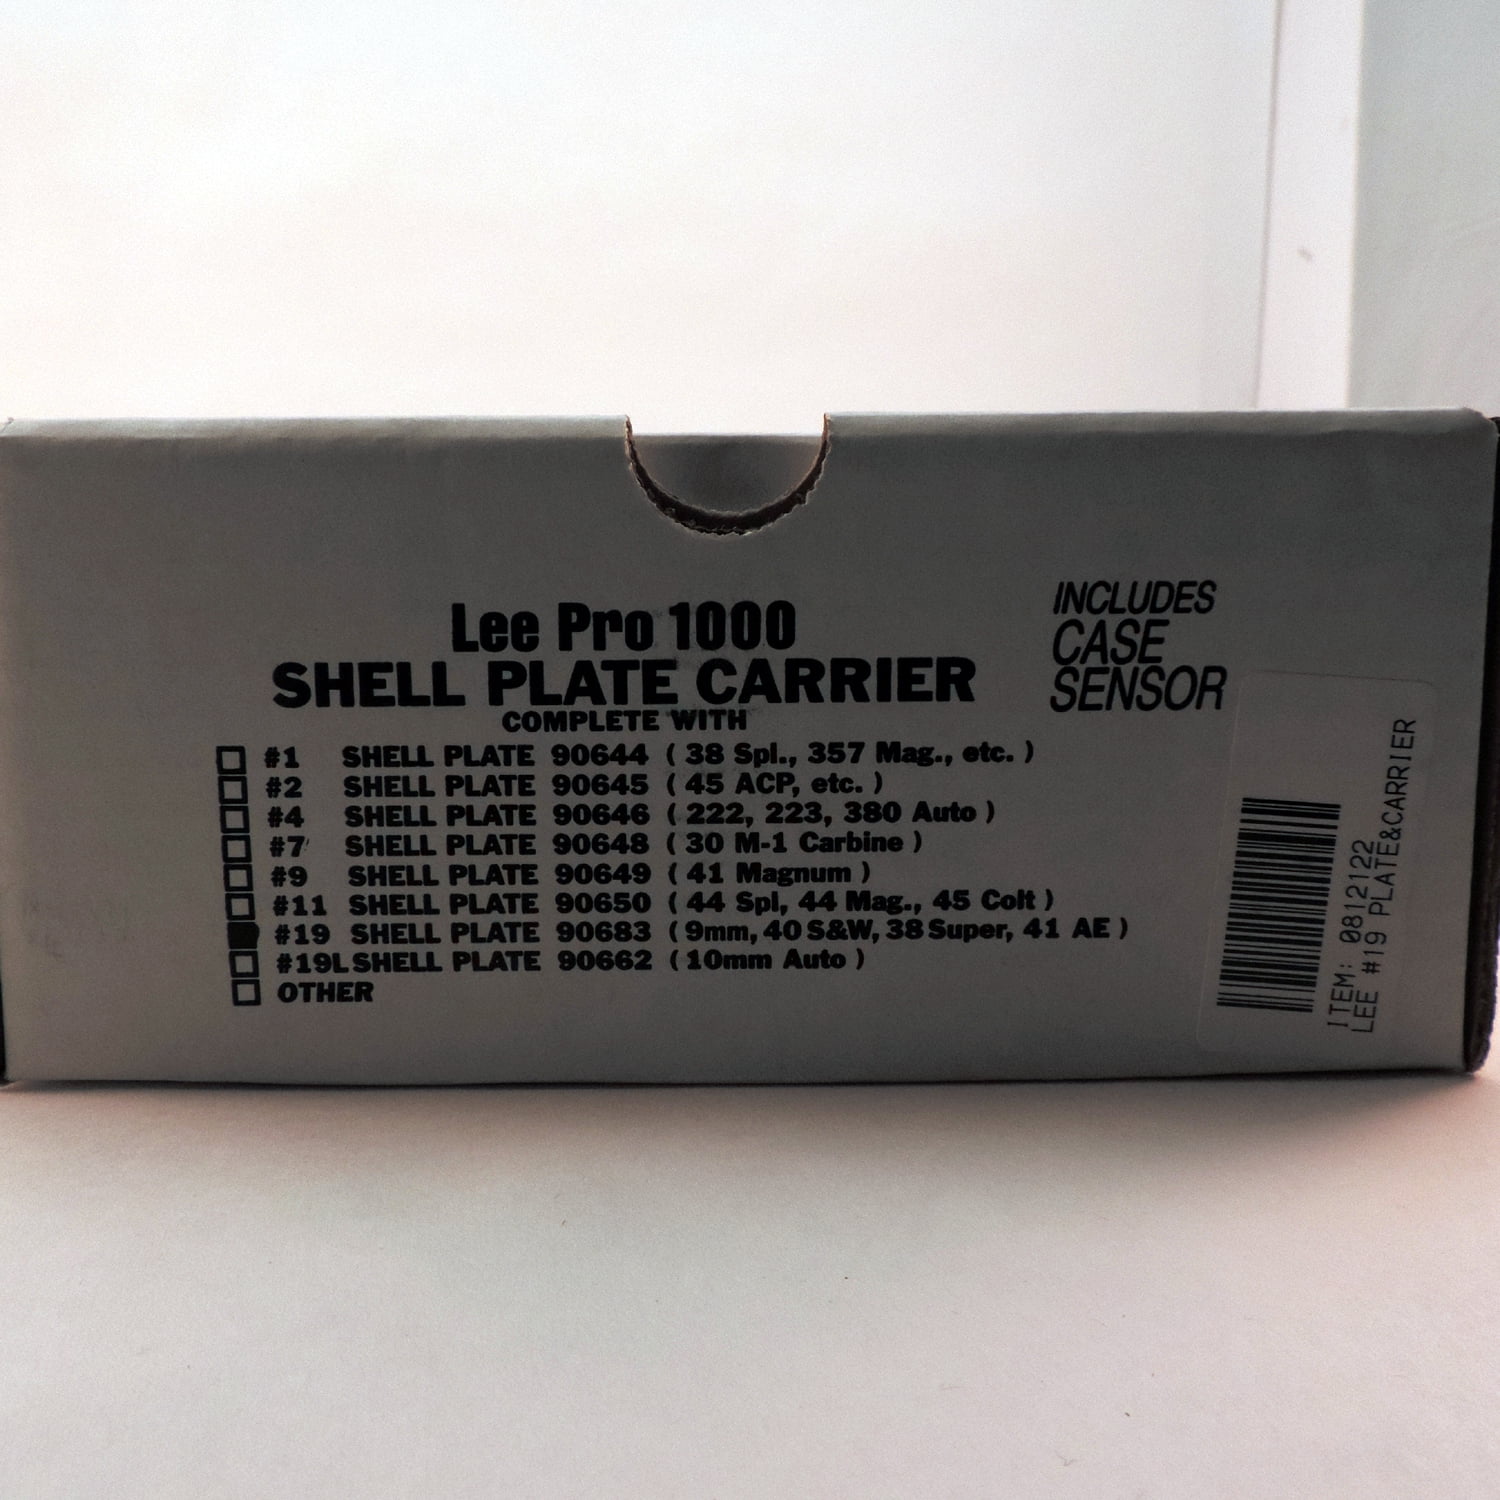 *DEAL* 9mm Luger, 40 S&W Lee Pro 1000 Progressive Press Shellplate Carrier #19 